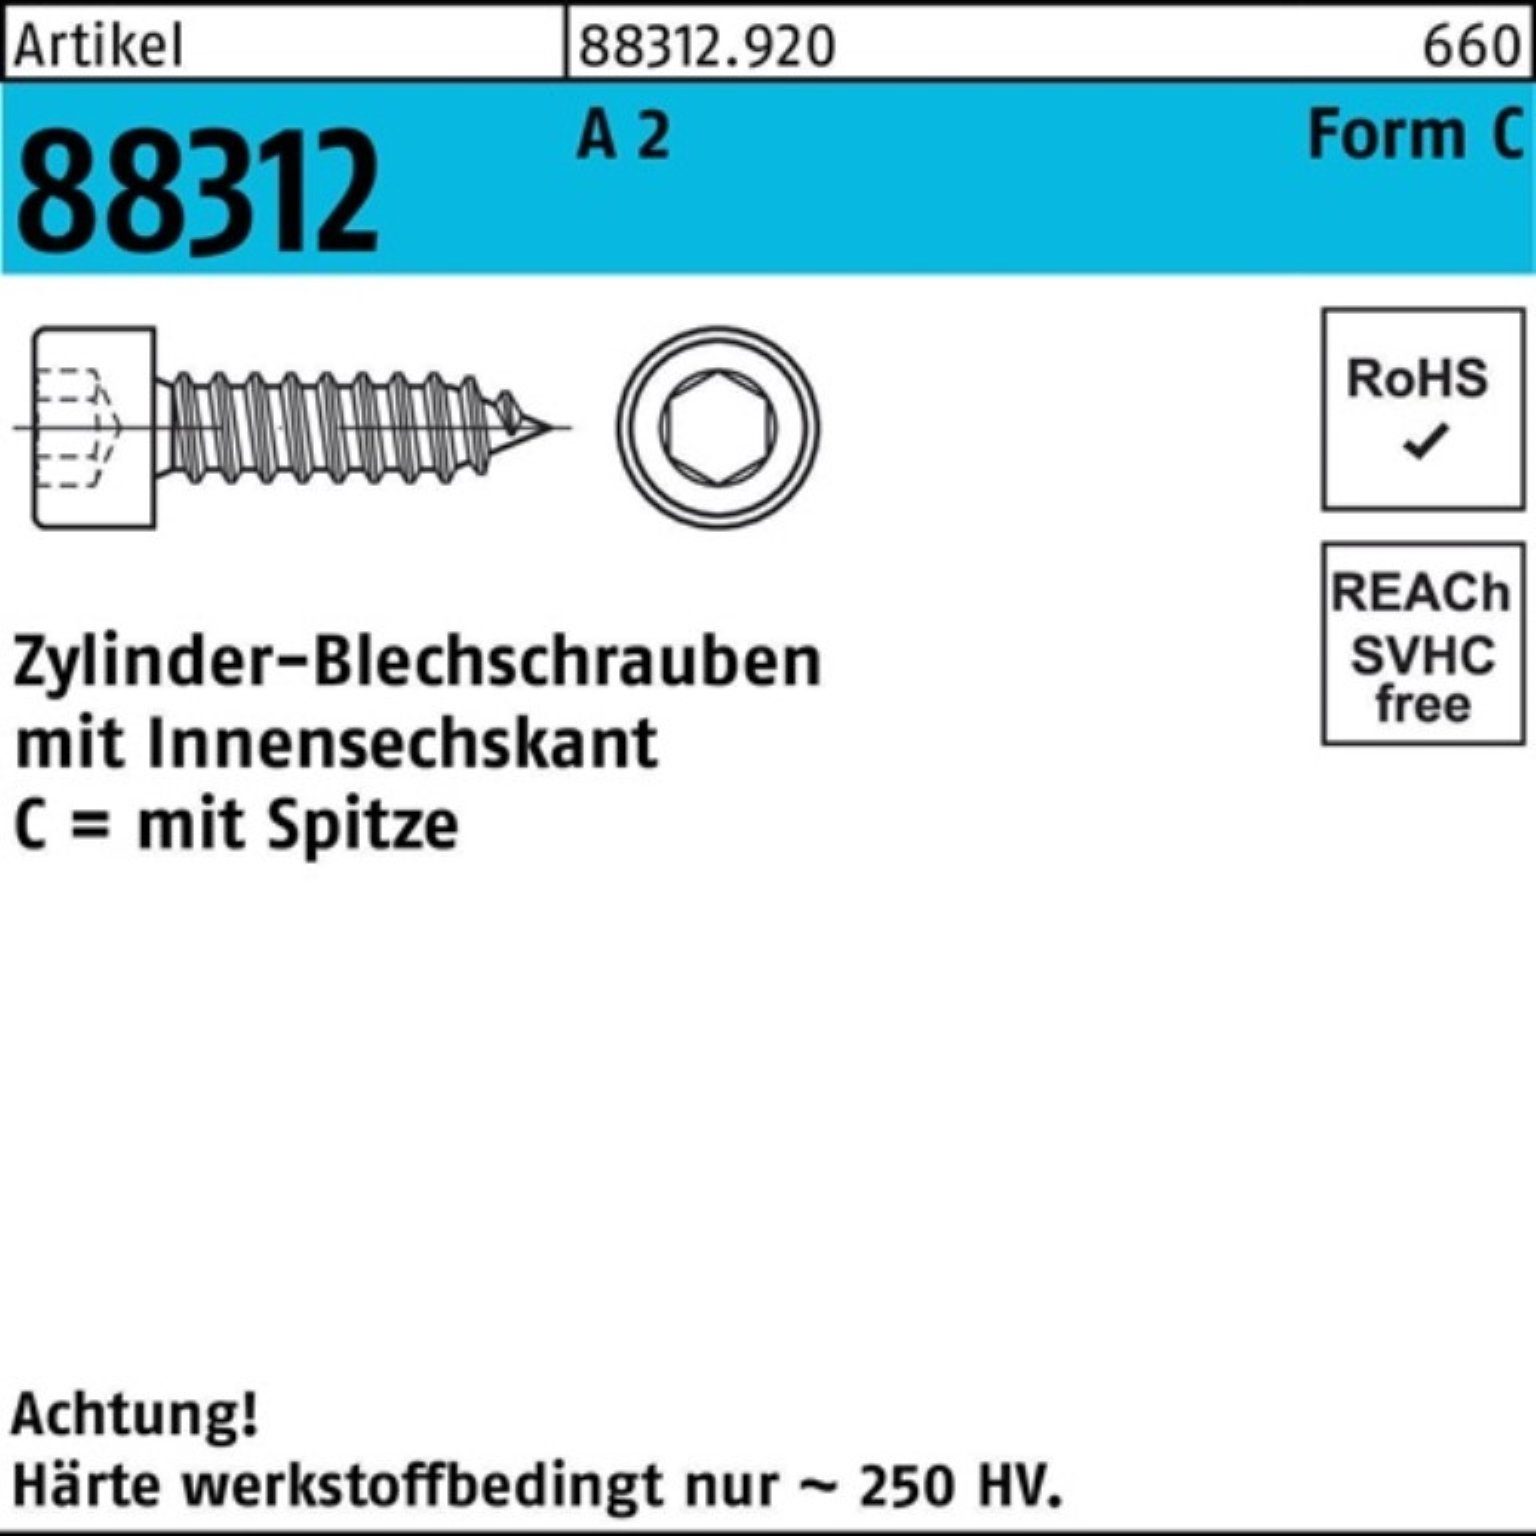 Reyher Blechschraube 200er Pack Zylinderblechschraube R 88312 Spitze/Innen-6kt C 5,5x 25 A